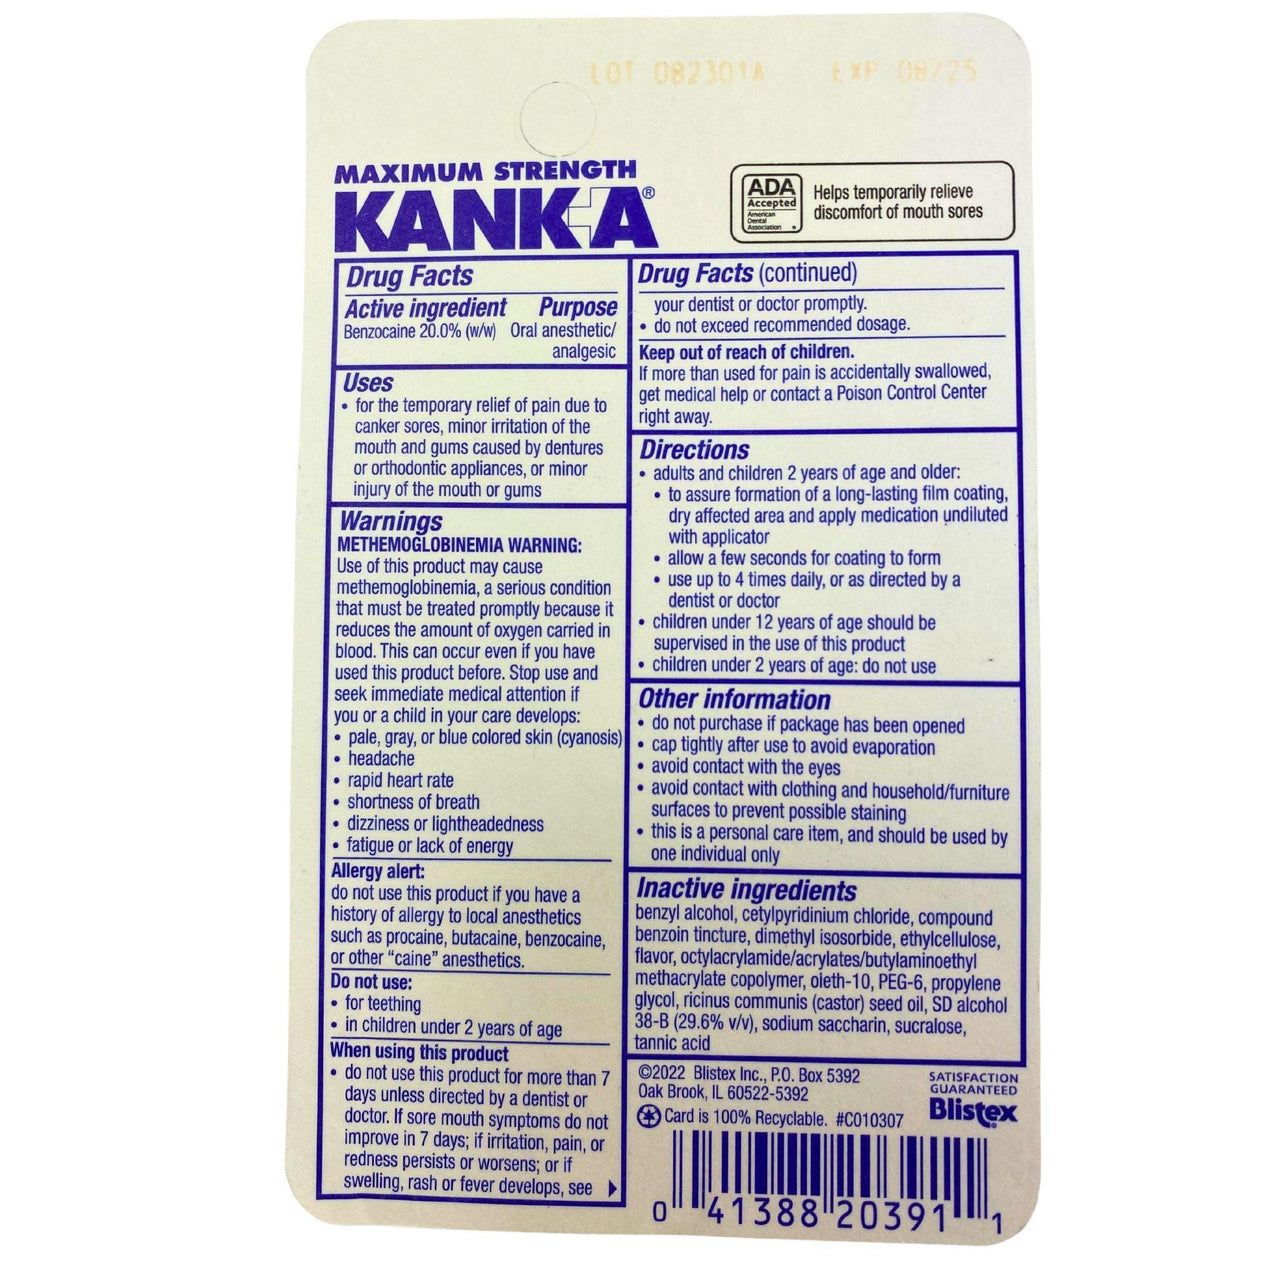 Blistex Kanka Maximum Strength Mouth Pain Liquid Oral Anesthetic 0.33OZ (60 Pcs Lot) - Discount Wholesalers Inc